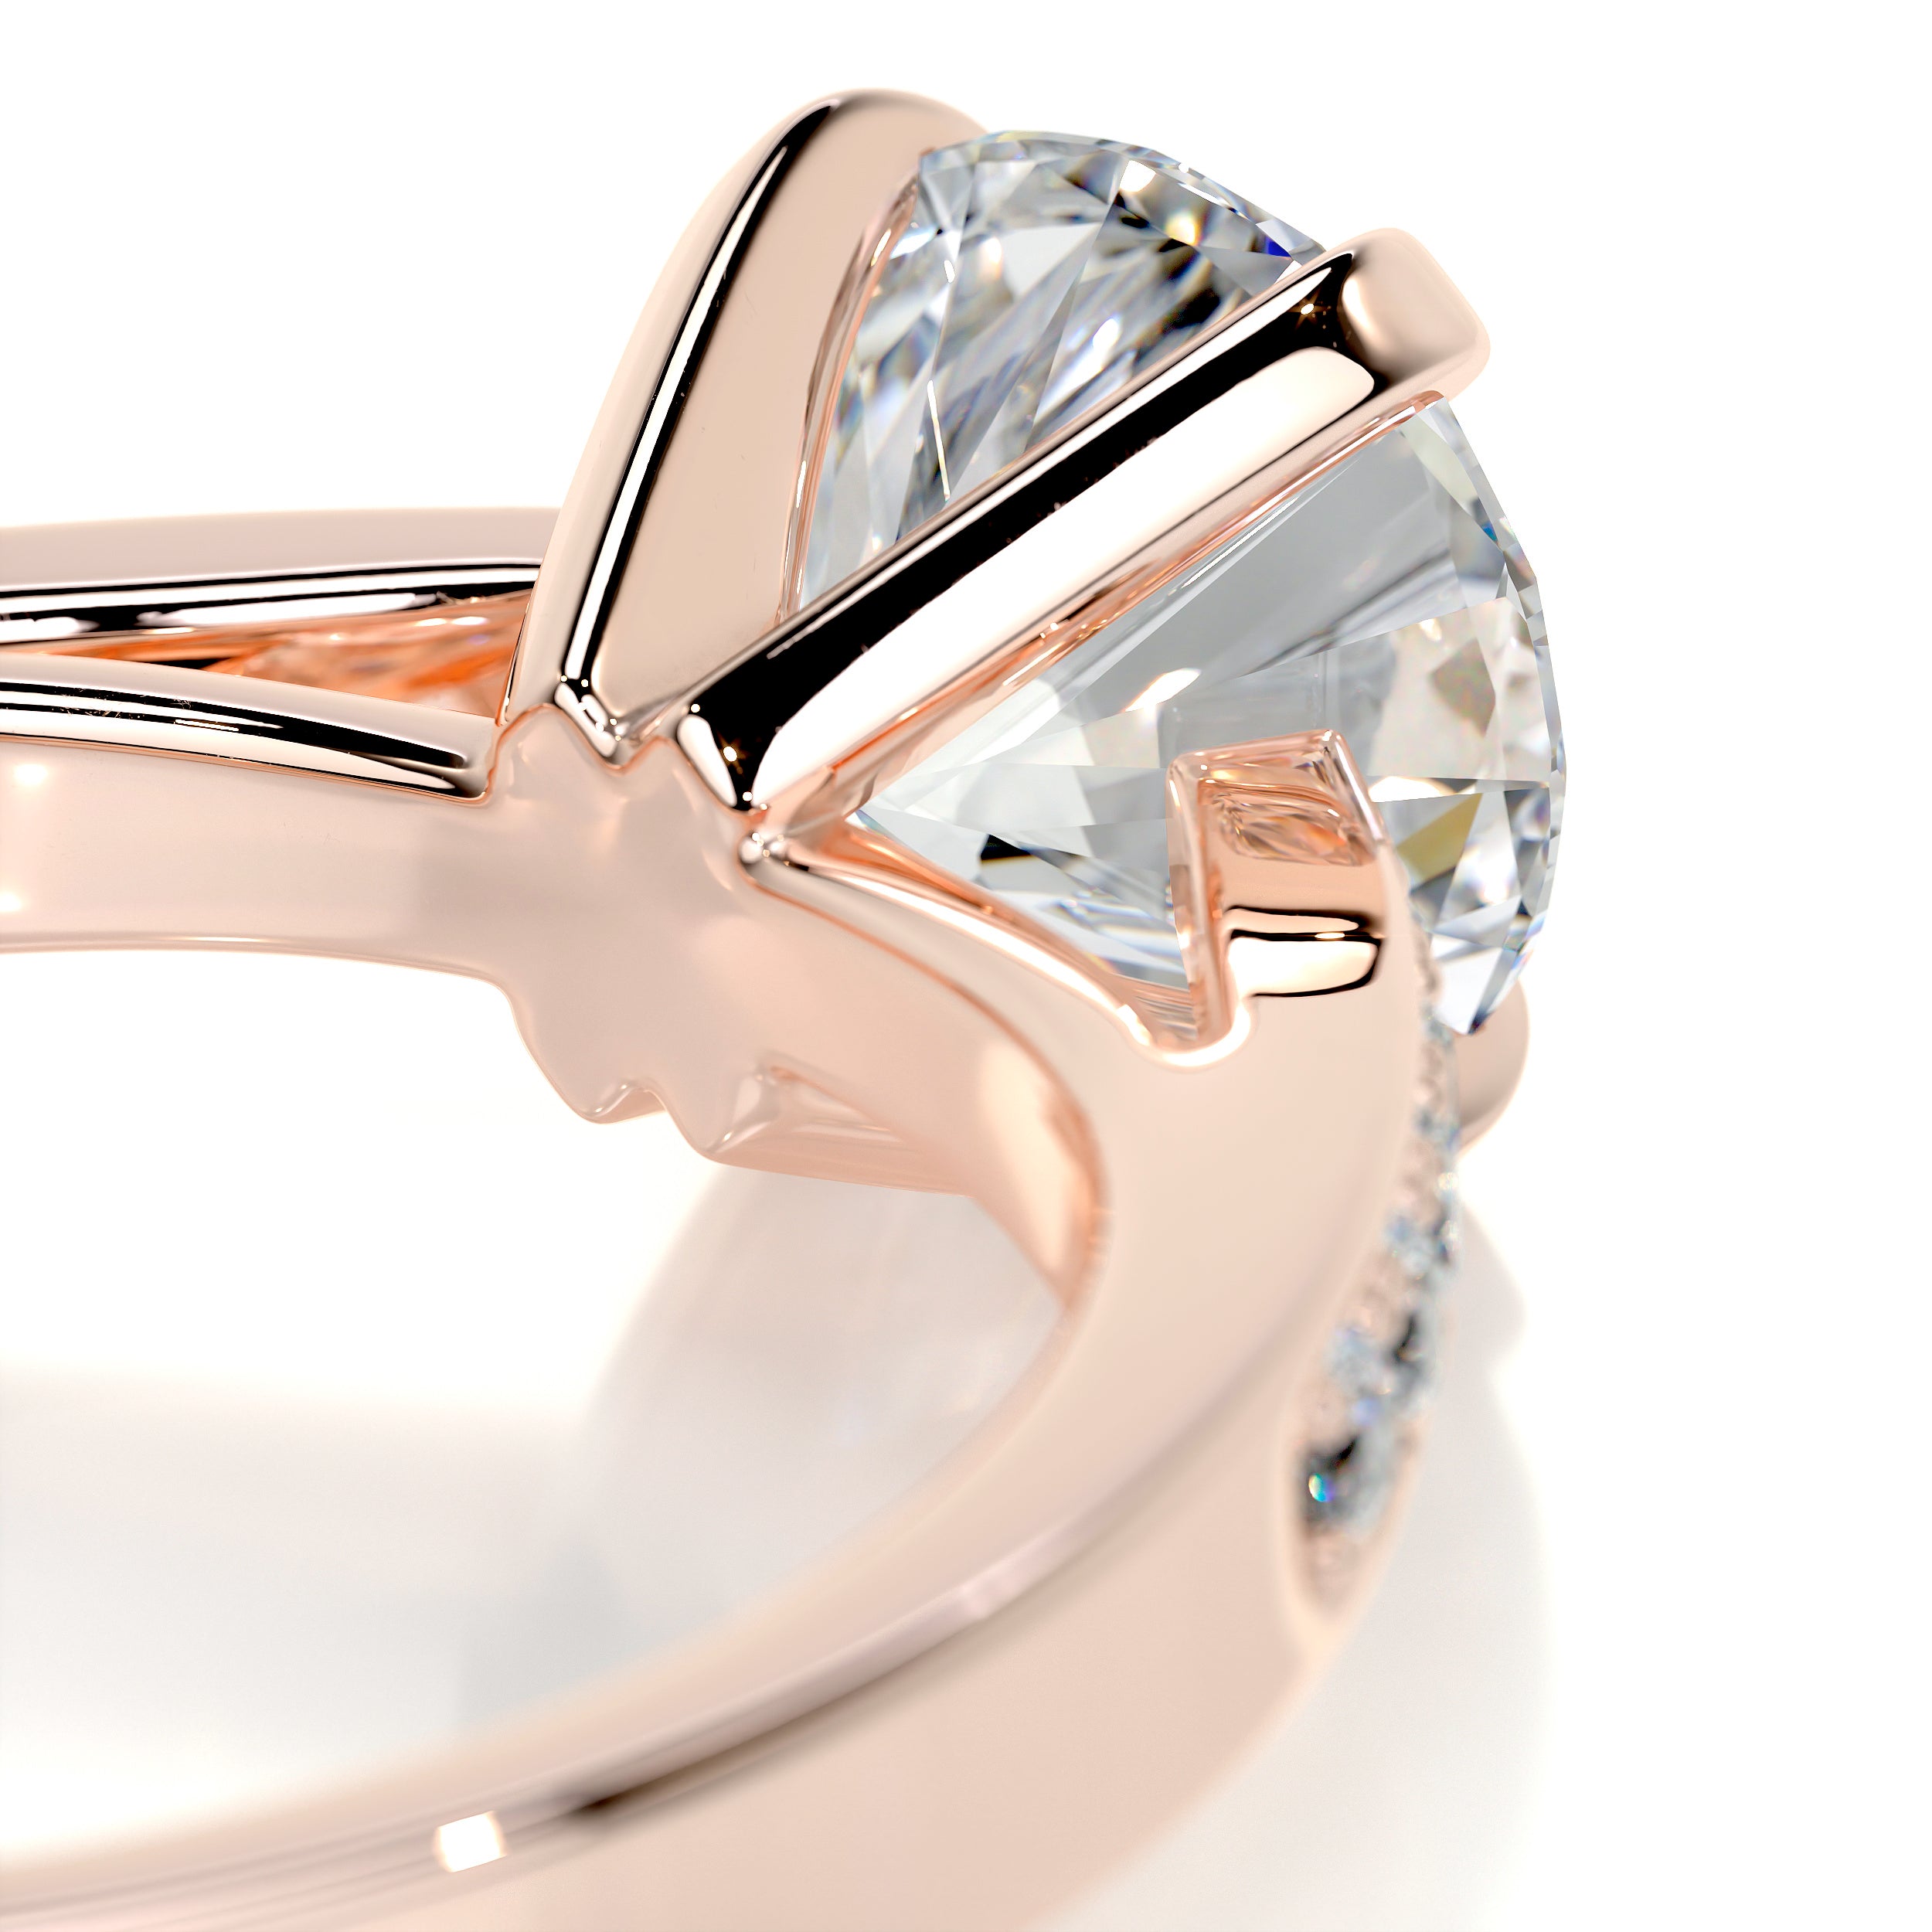 Margaret Diamond Engagement Ring -14K Rose Gold